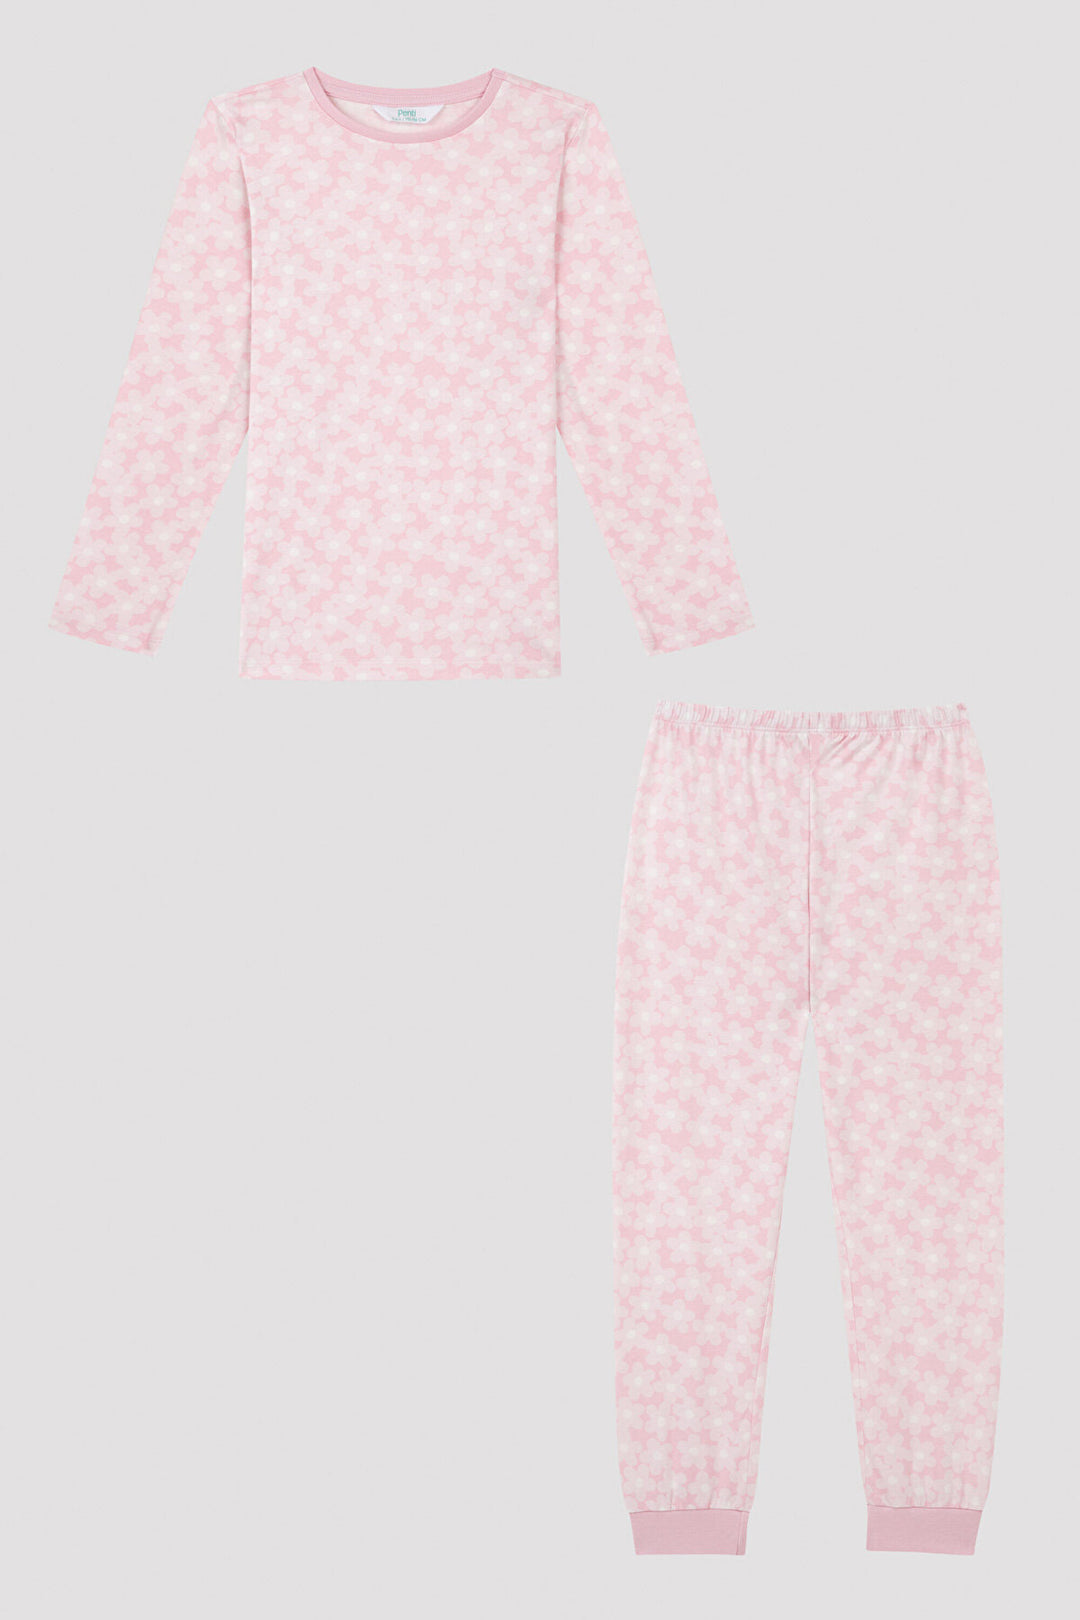 Girls Flowerland CK LS 2 Pack Pyjama Set